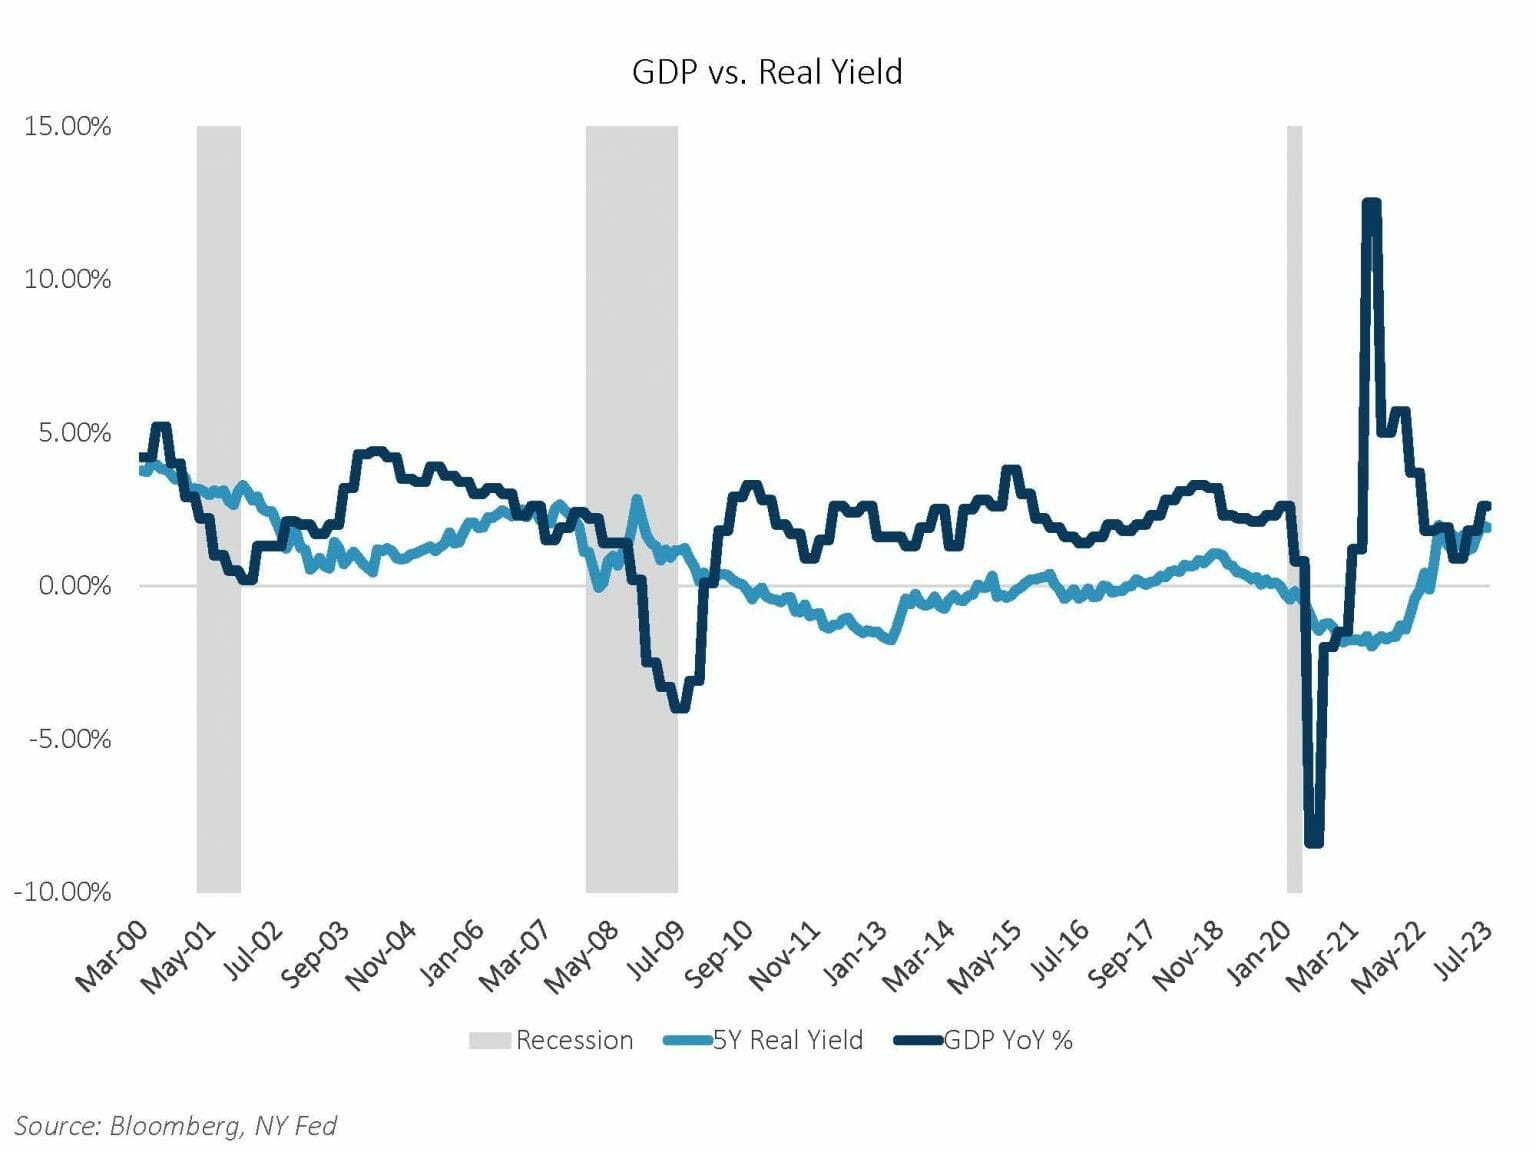 GDP vs real yield